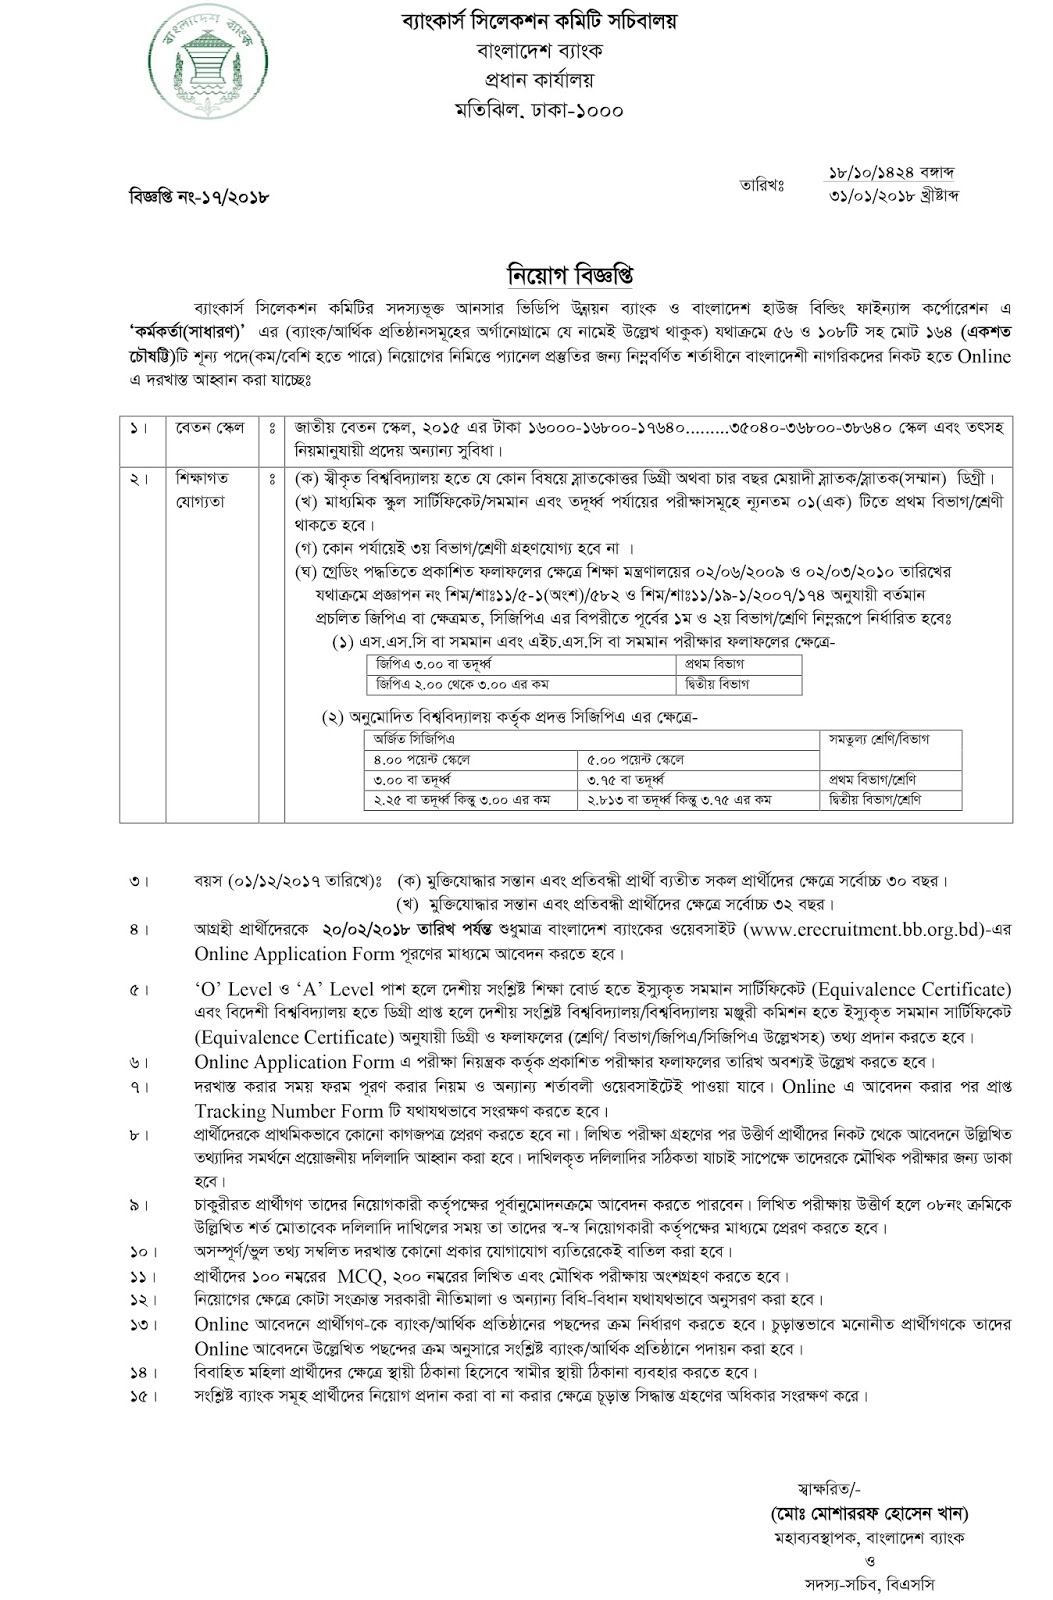 Bangladesh House Building Finance Corporation(BHBFC) Officer (General) Recruitment Circular 2018